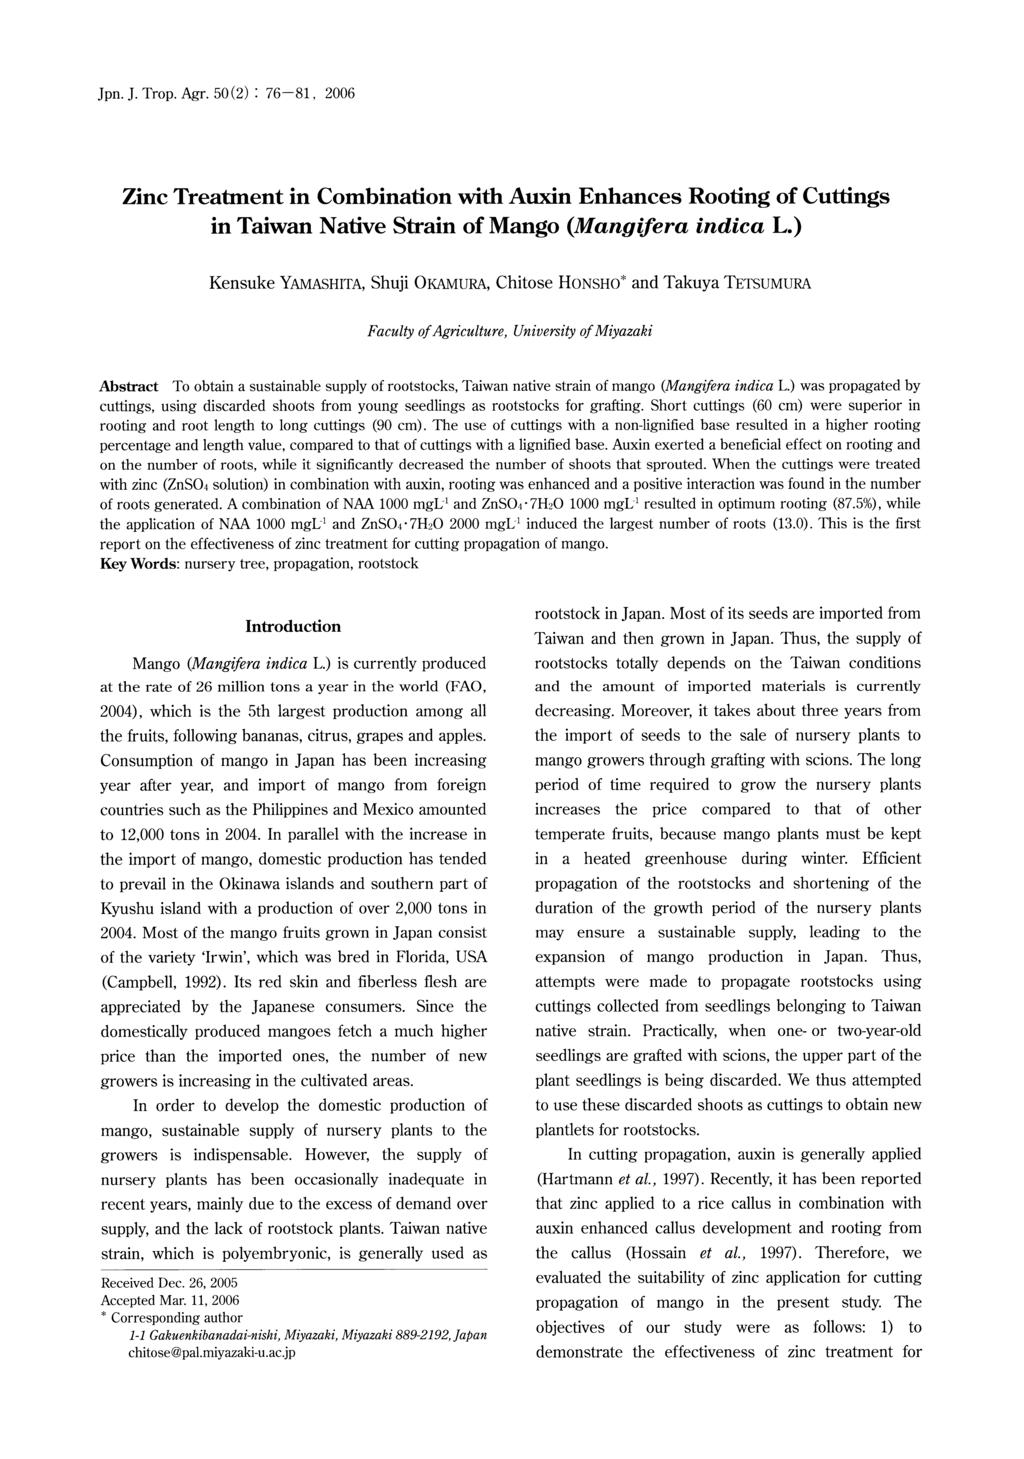 Jpn. J. Trop. Agr. 50 (2): 76-81, 2006 Zinc Treatment in Combination Auxin Enhances Rooting Cuttings in Taiwan Native Strain Mango (Mangfera iindica L.